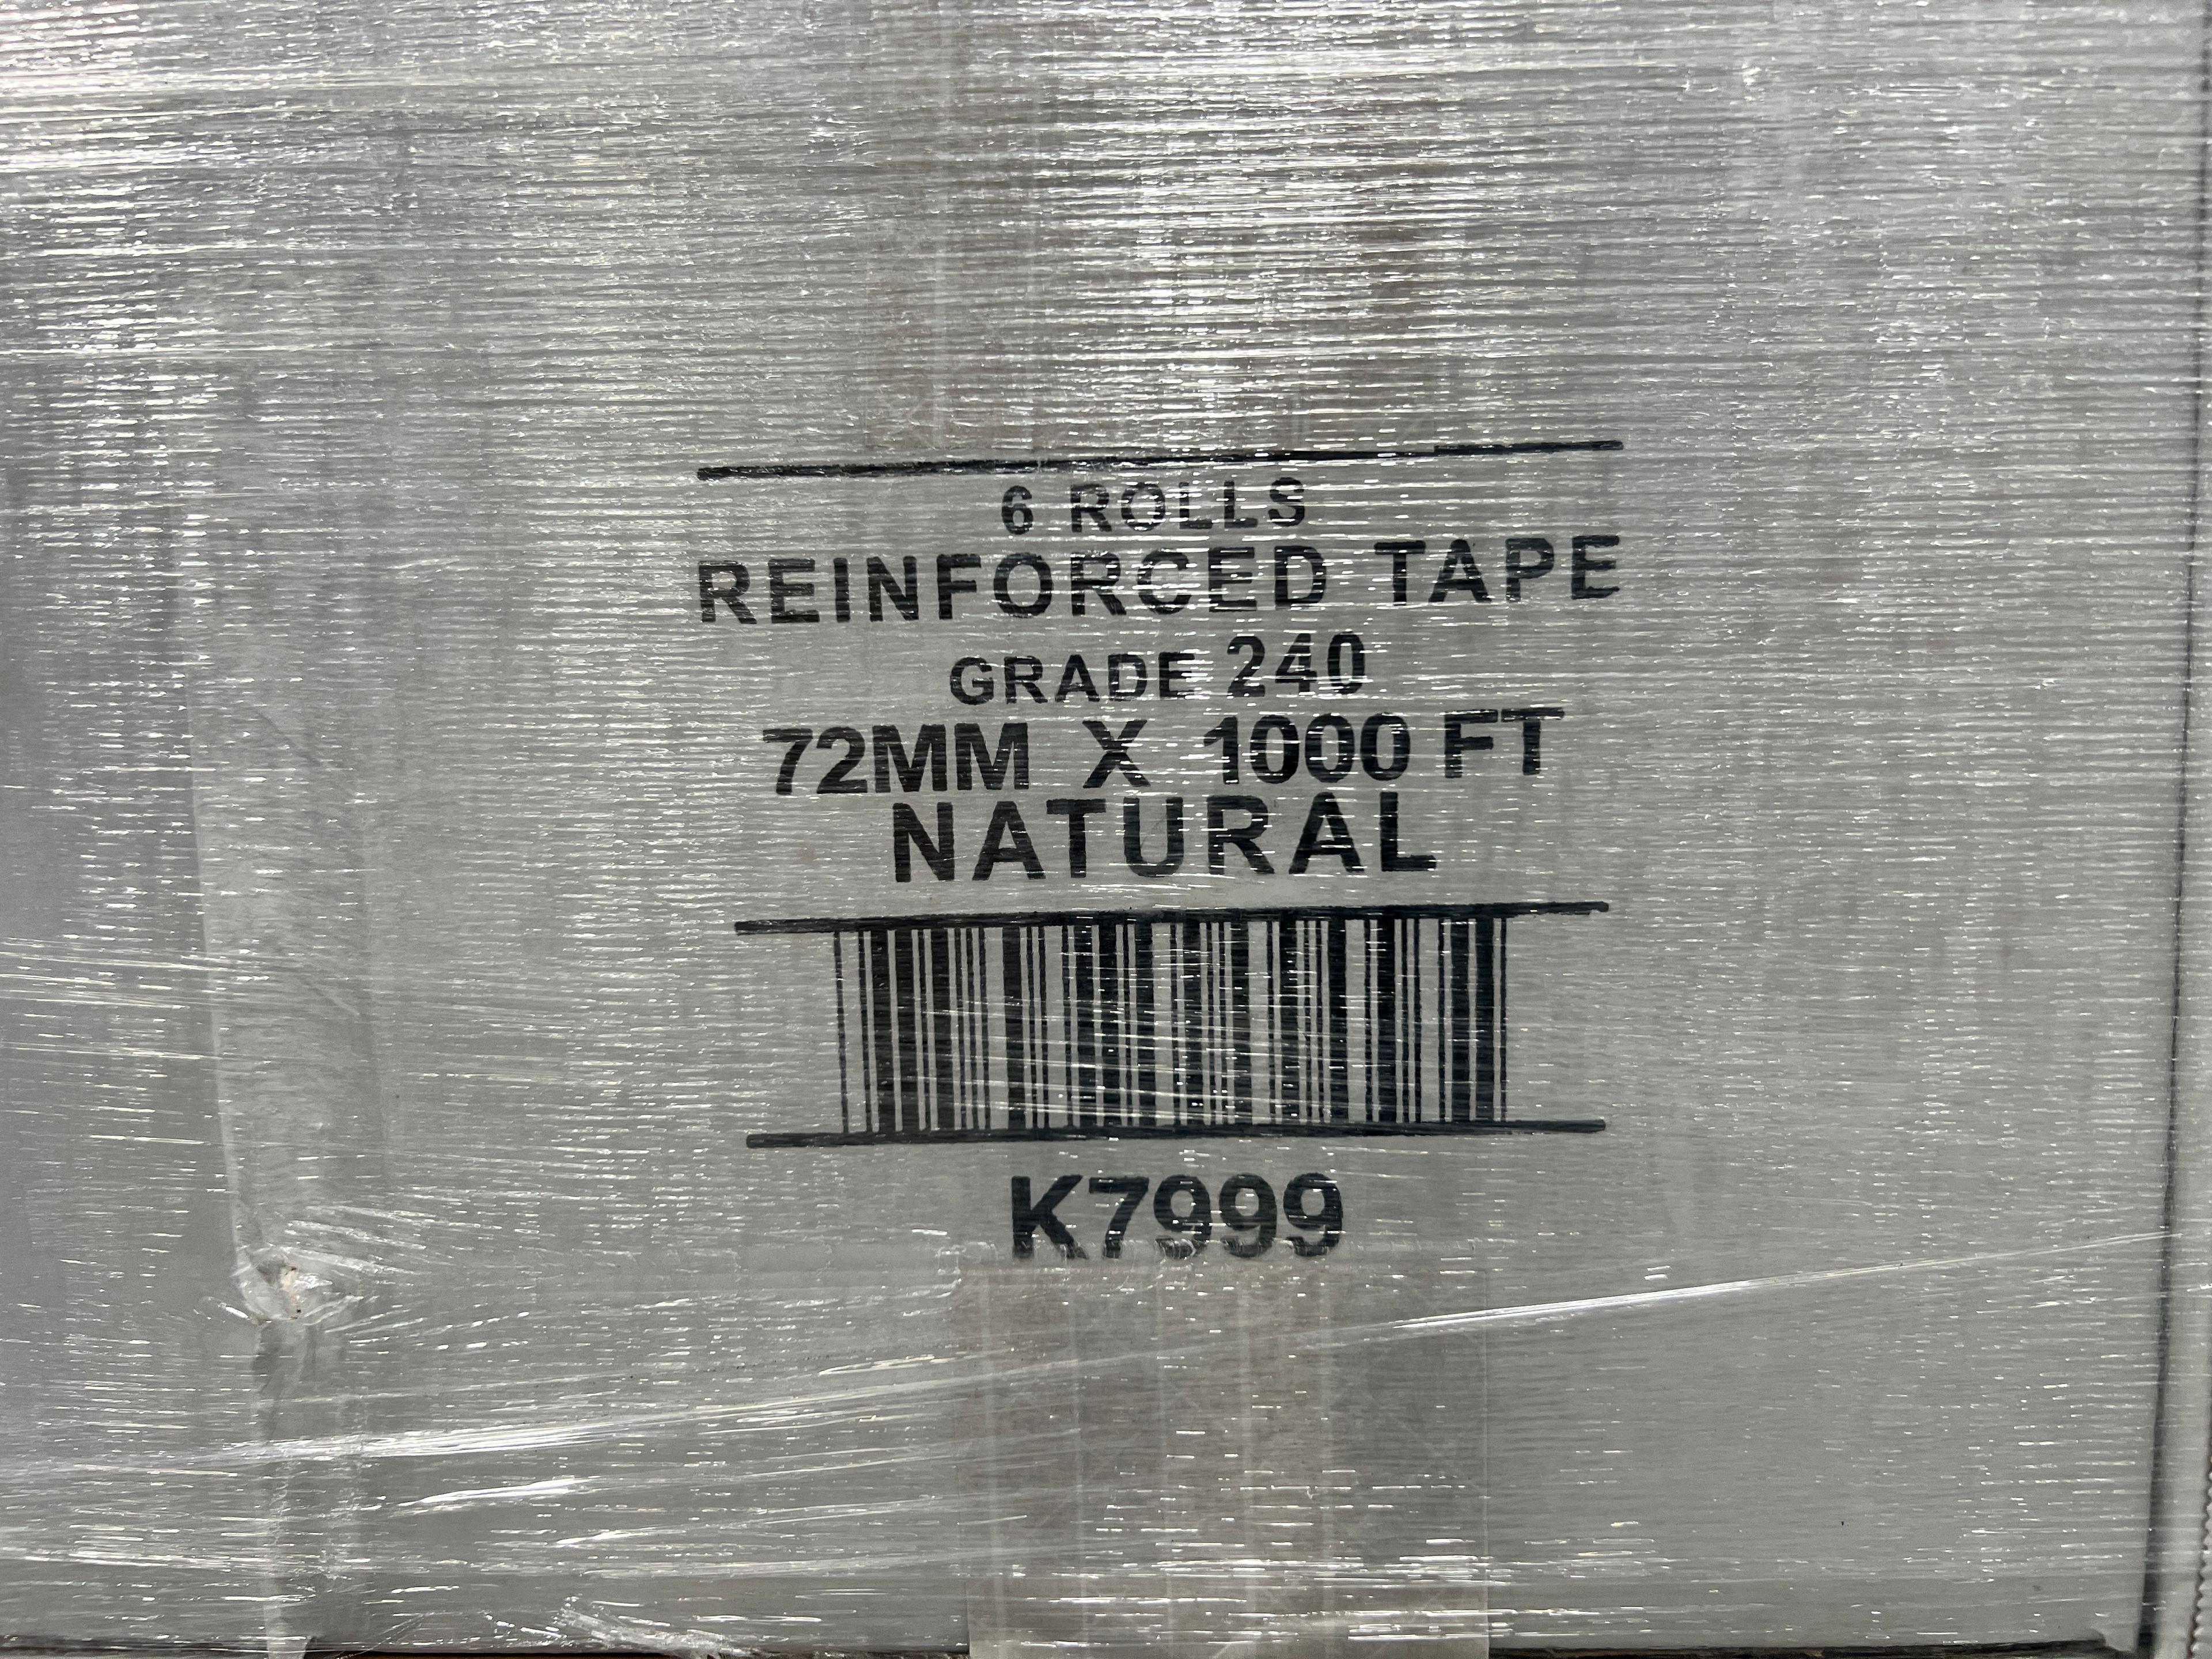 Reinforced Tape Grade 240 1000' Natural